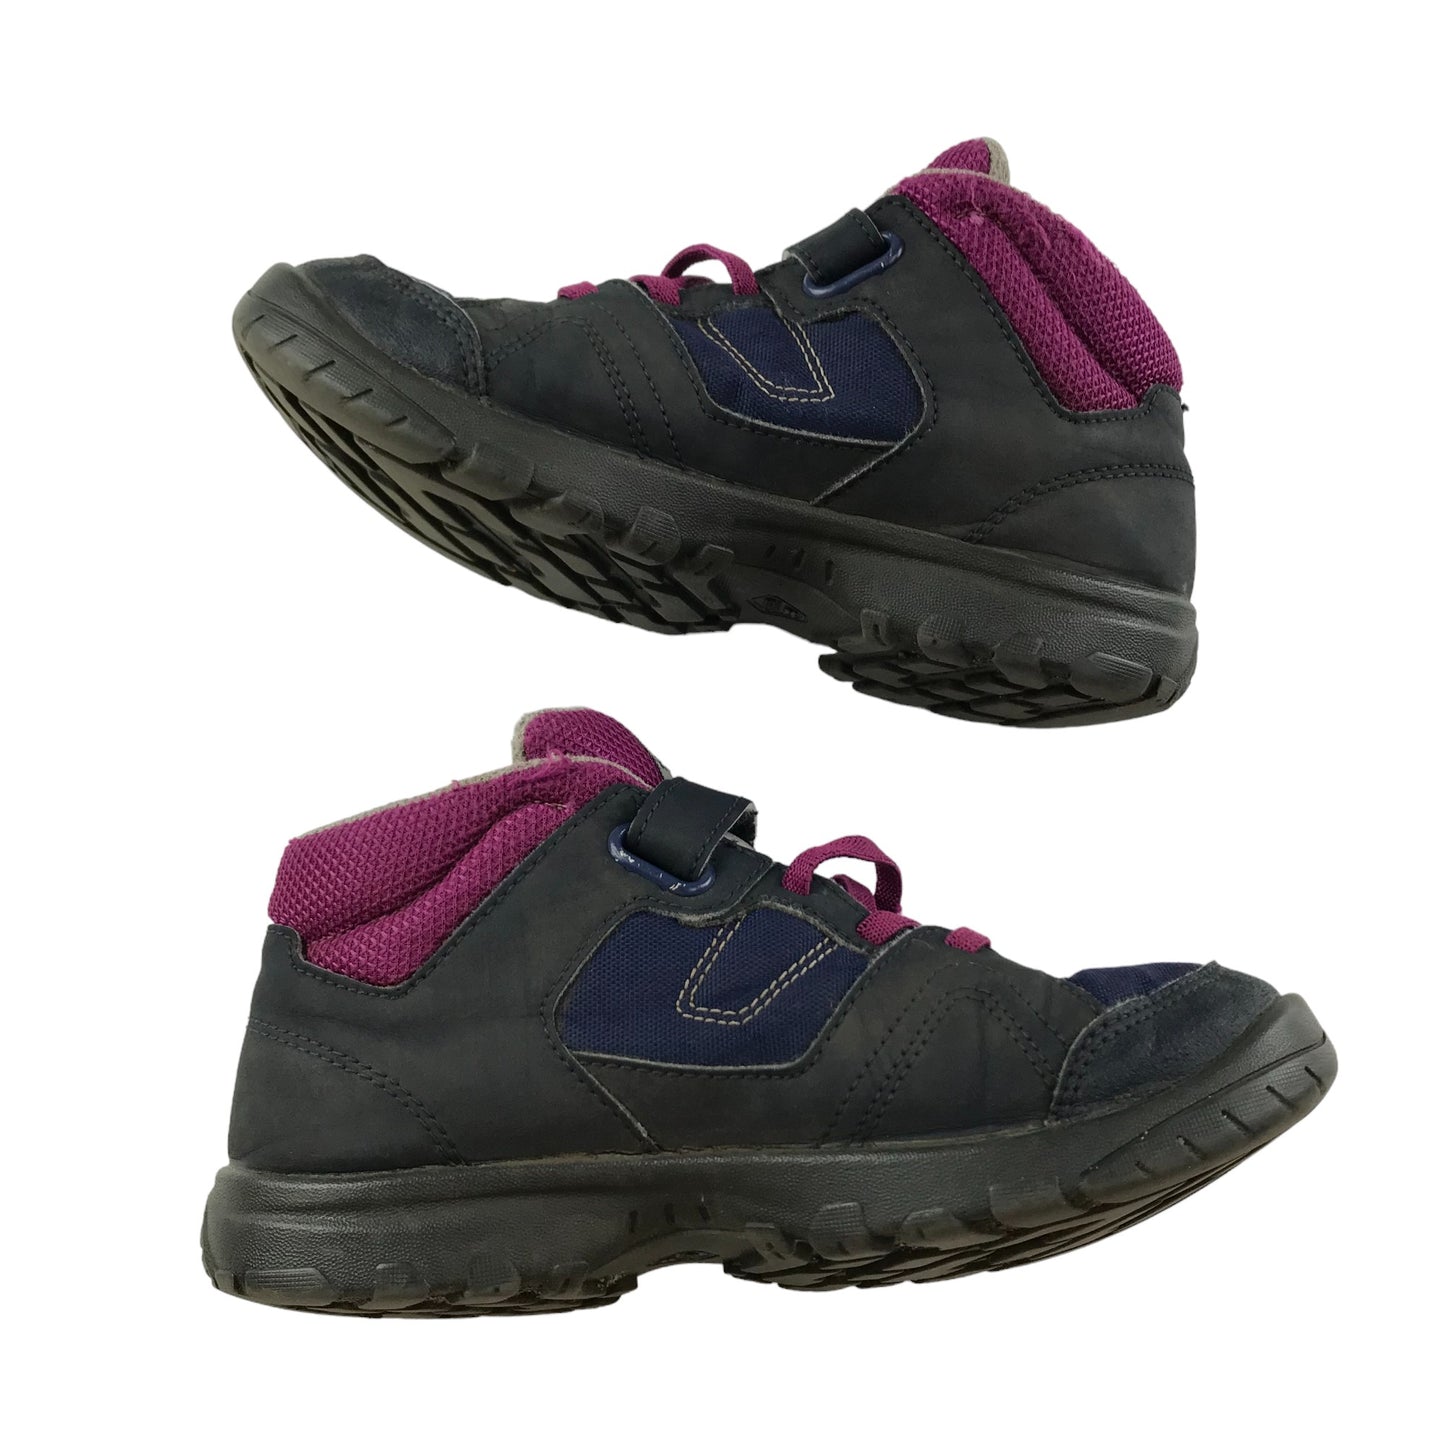 Trespass Snow Boots Shoe Size 13 Junior Blue Warm lined Waterproof